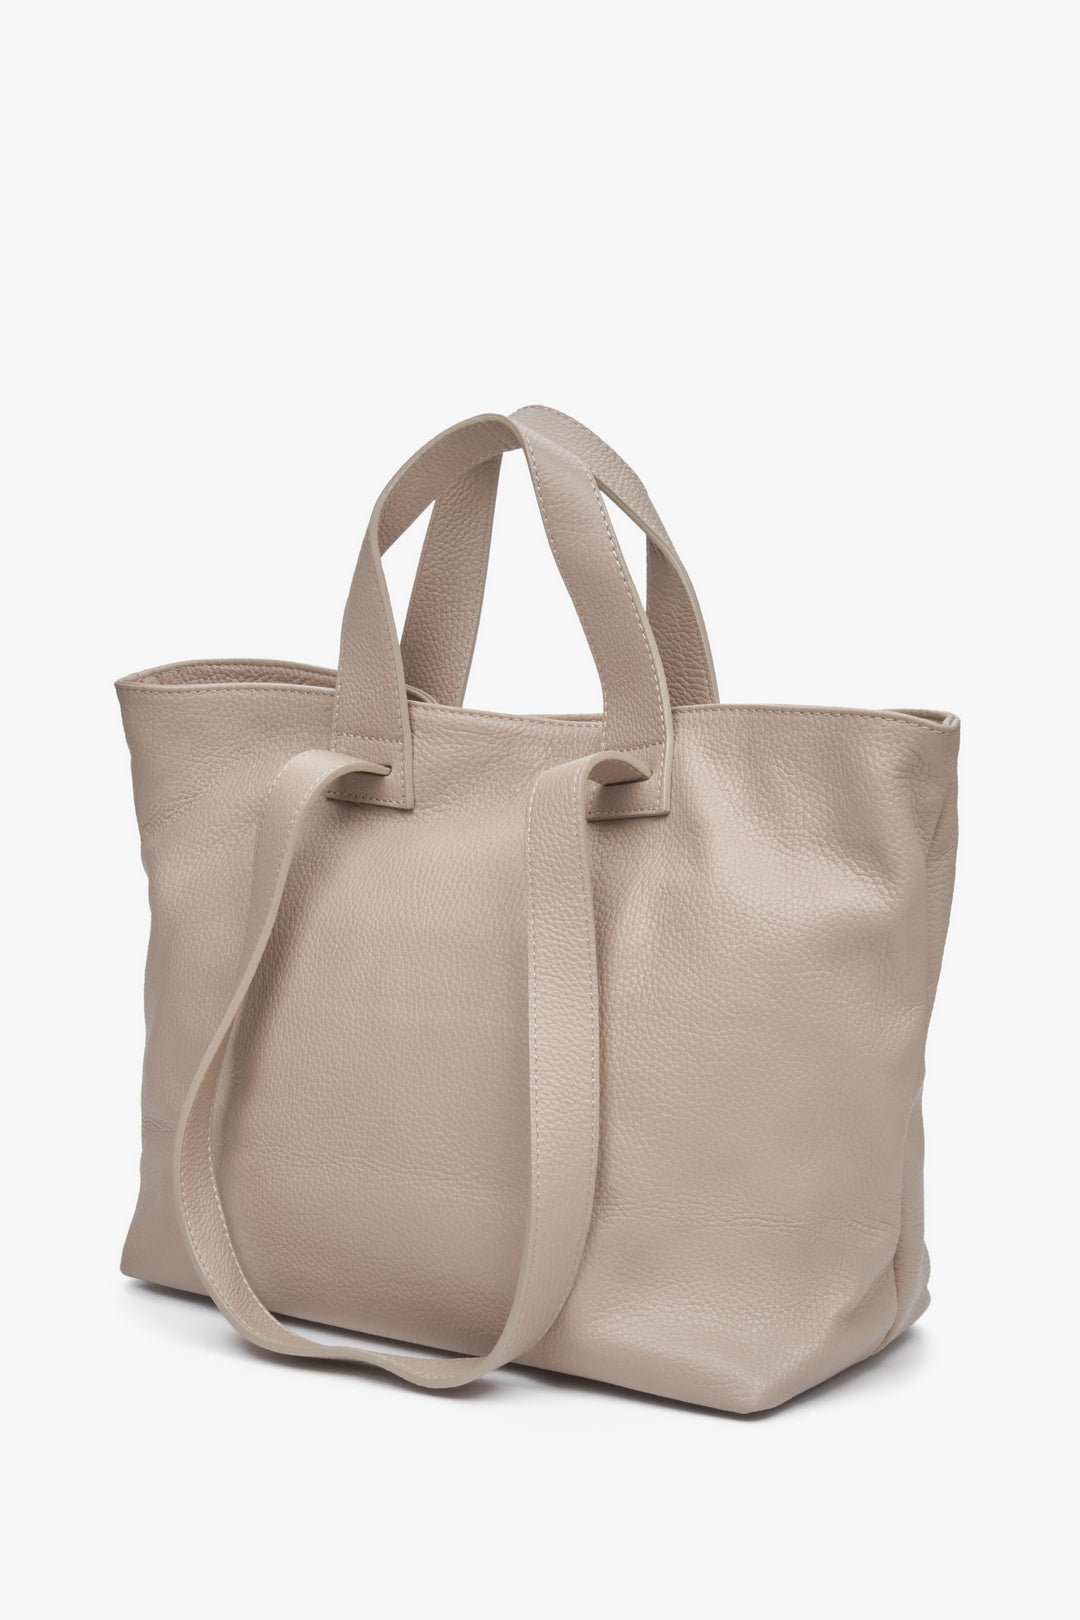 Women's large beige shopper-style handbag.